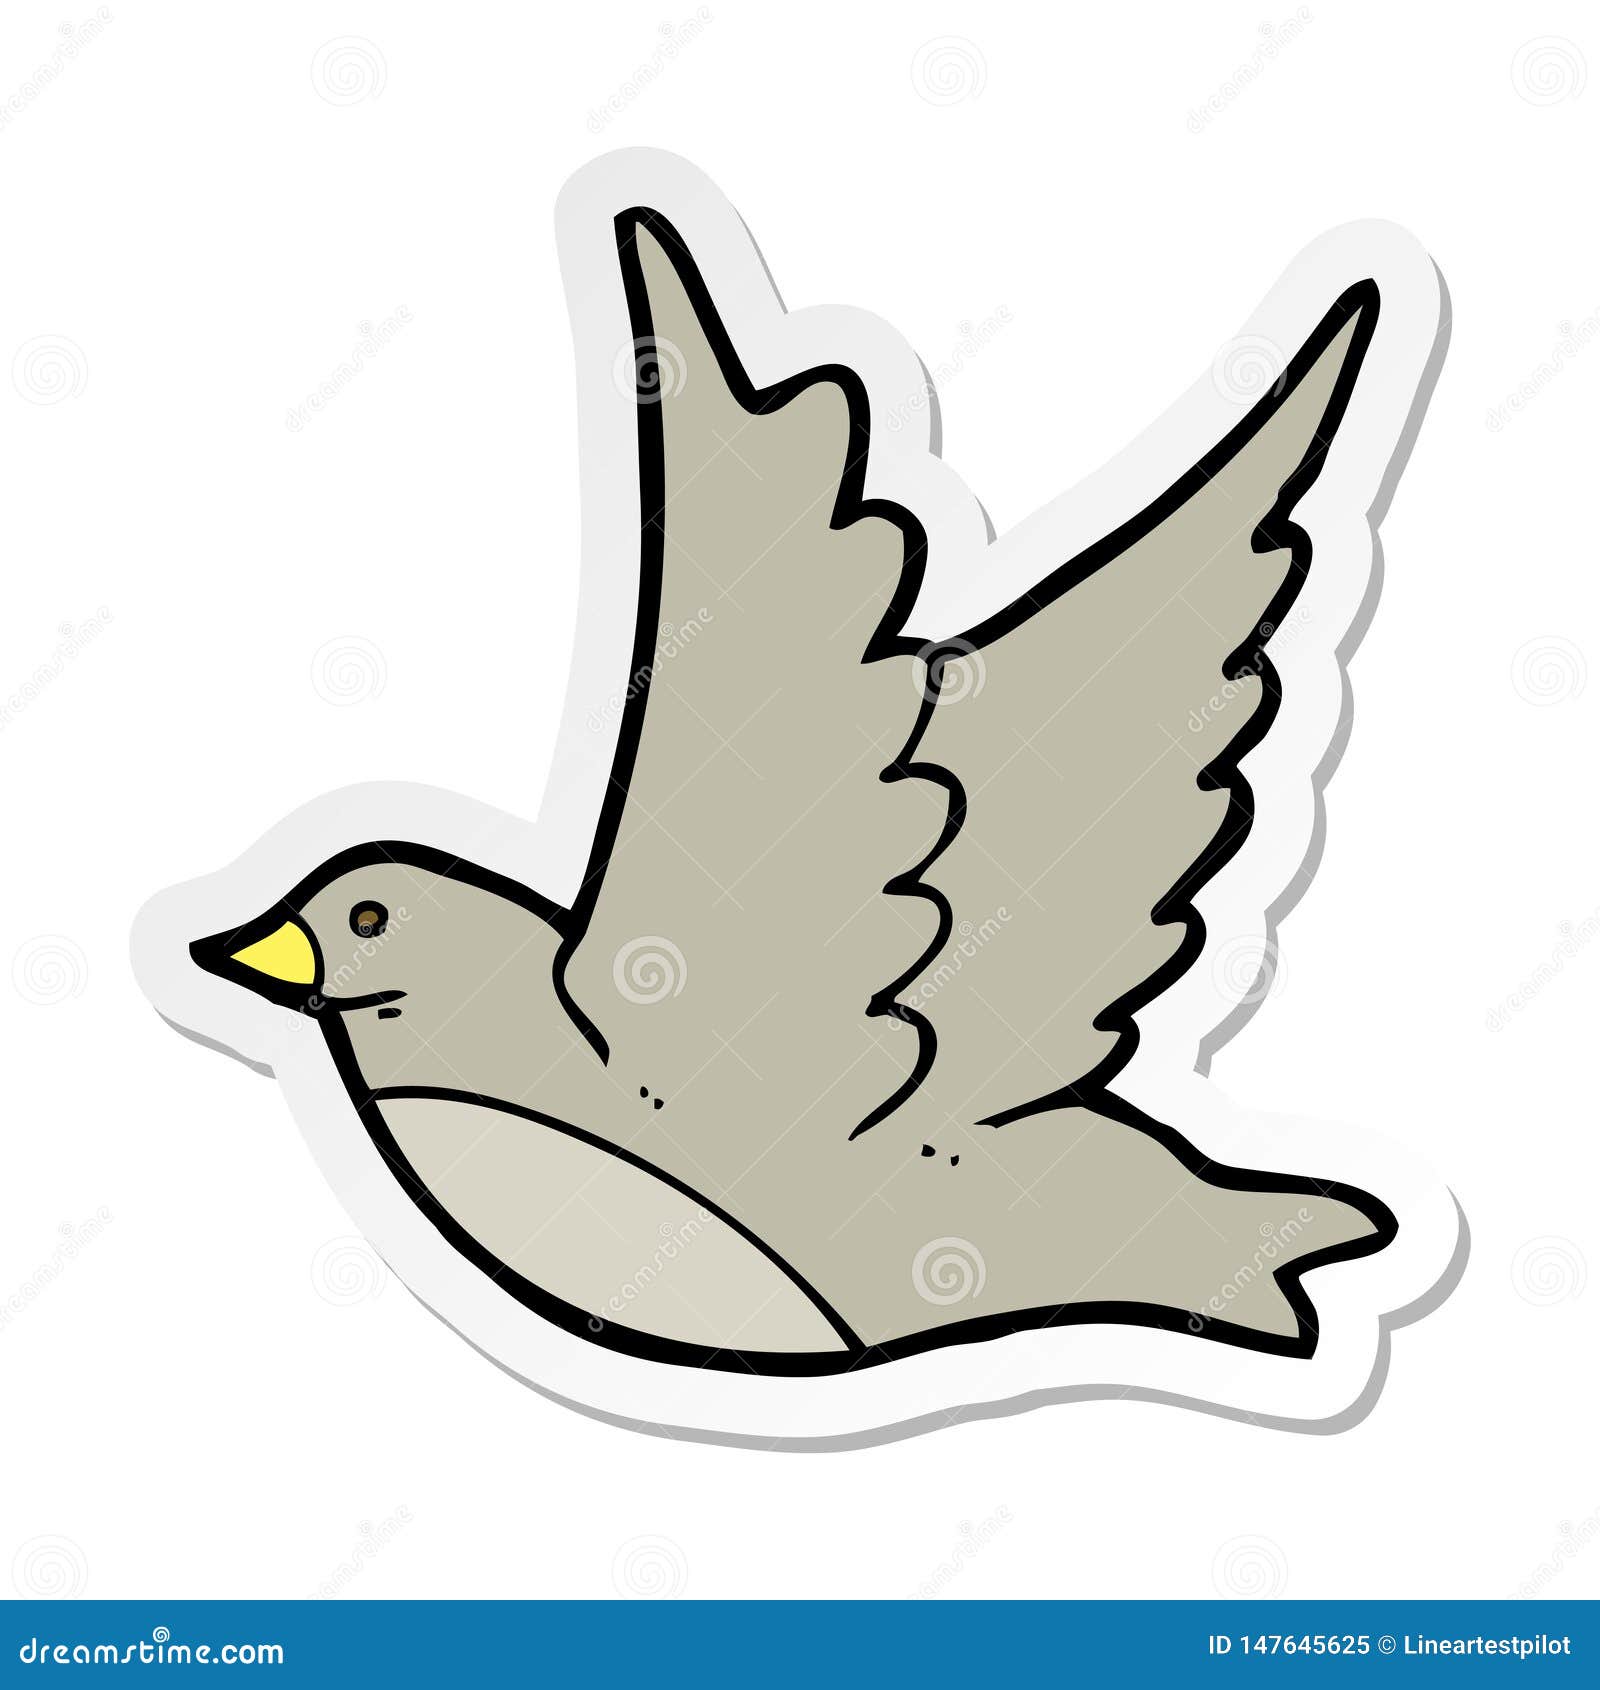 Sticker of a Cartoon Flying Bird Stock Vector - Illustration of simple,  happy: 147645625